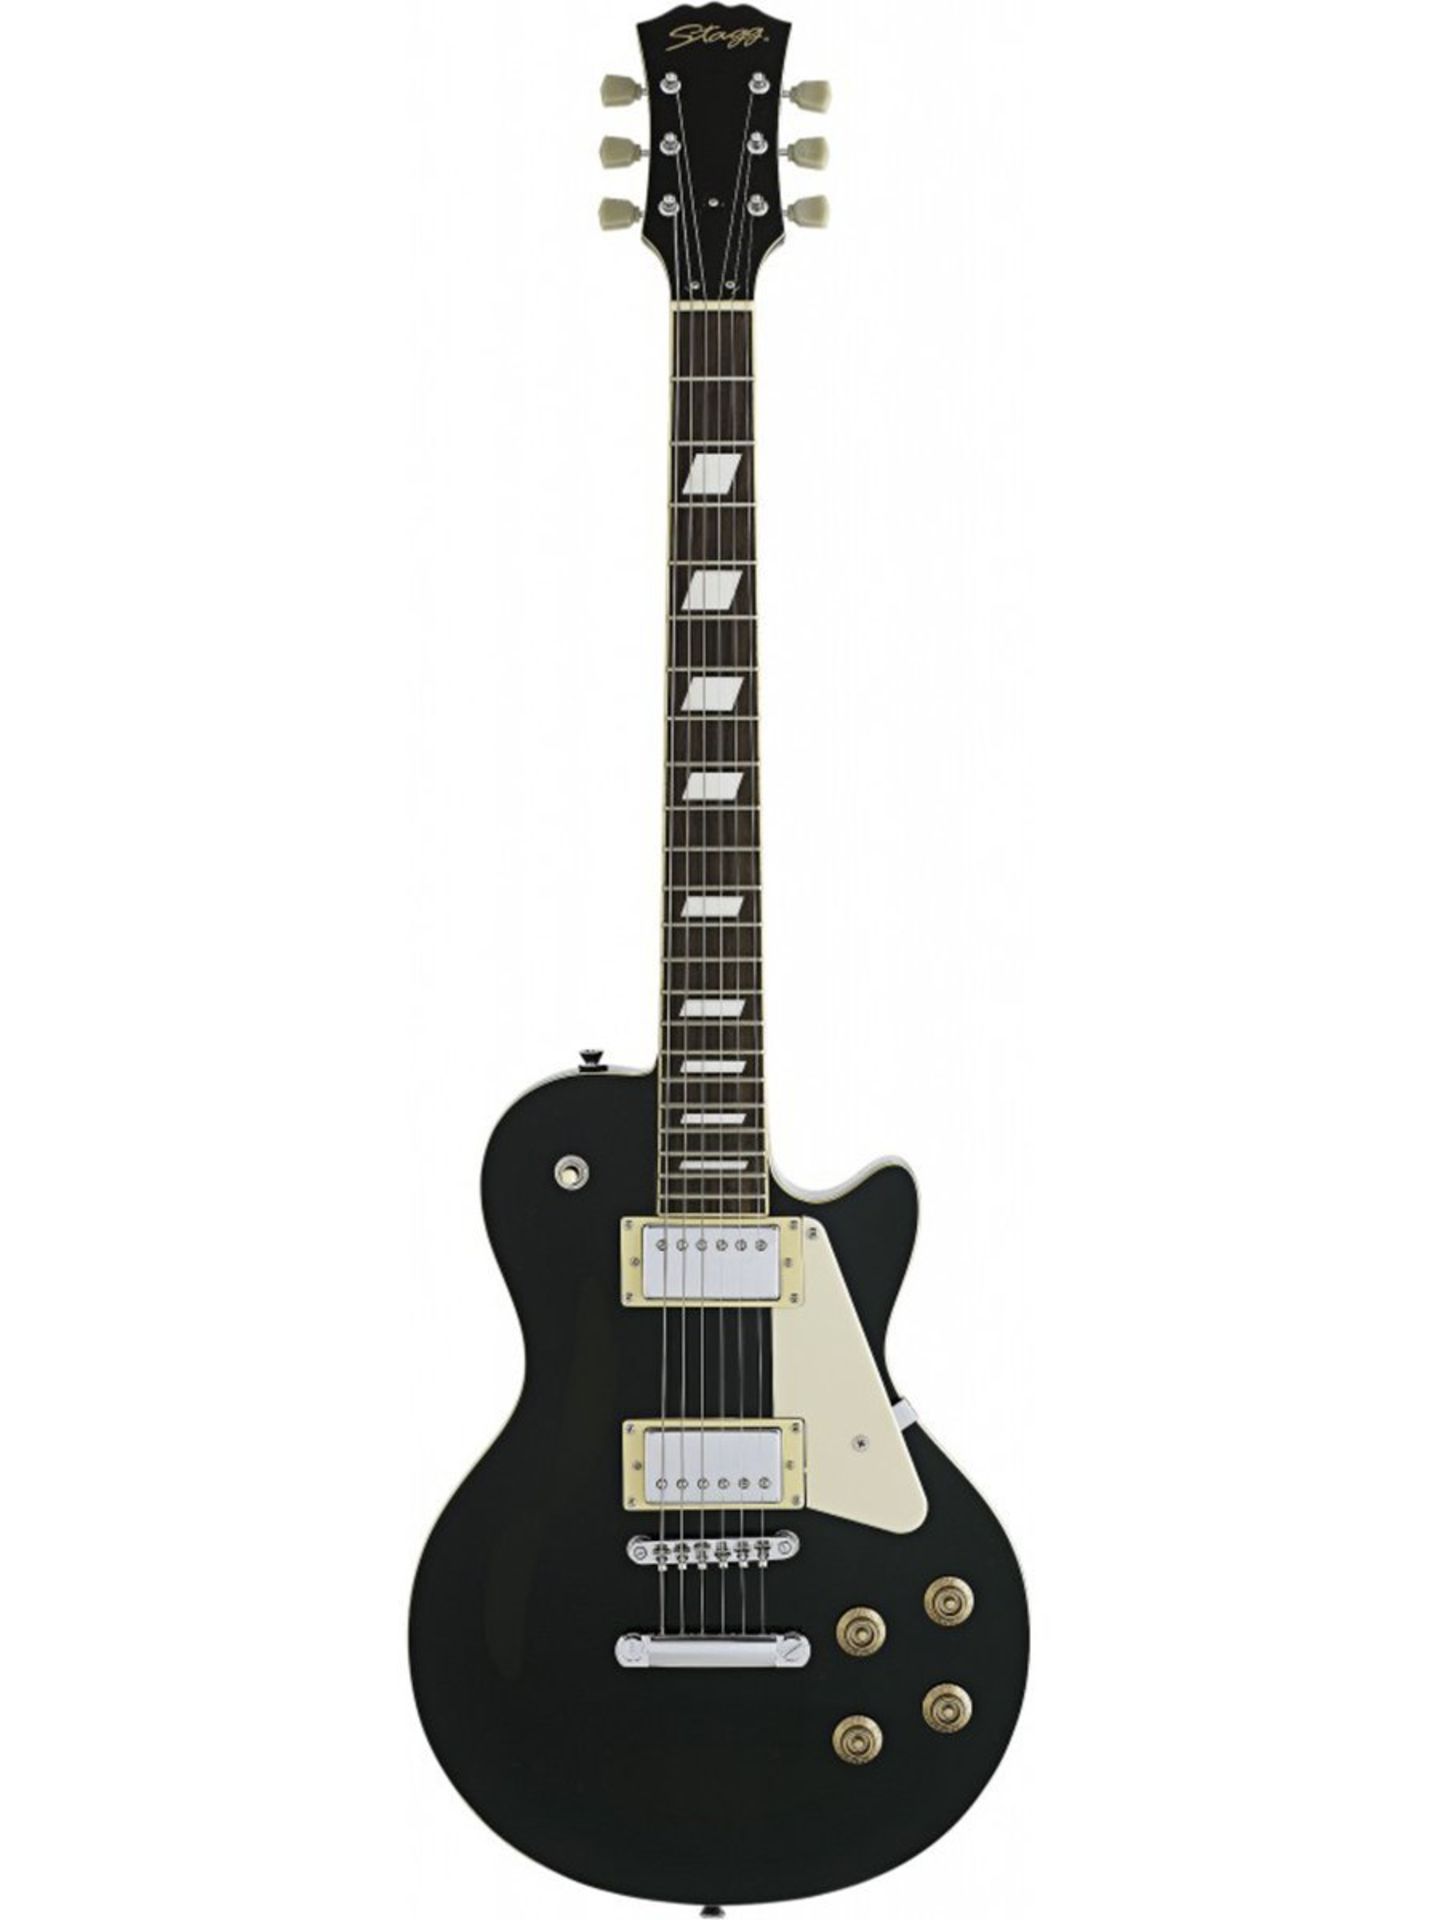 BRAND NEW Stagg G2 L320-BK Electric Guitar Black RRP £399.99